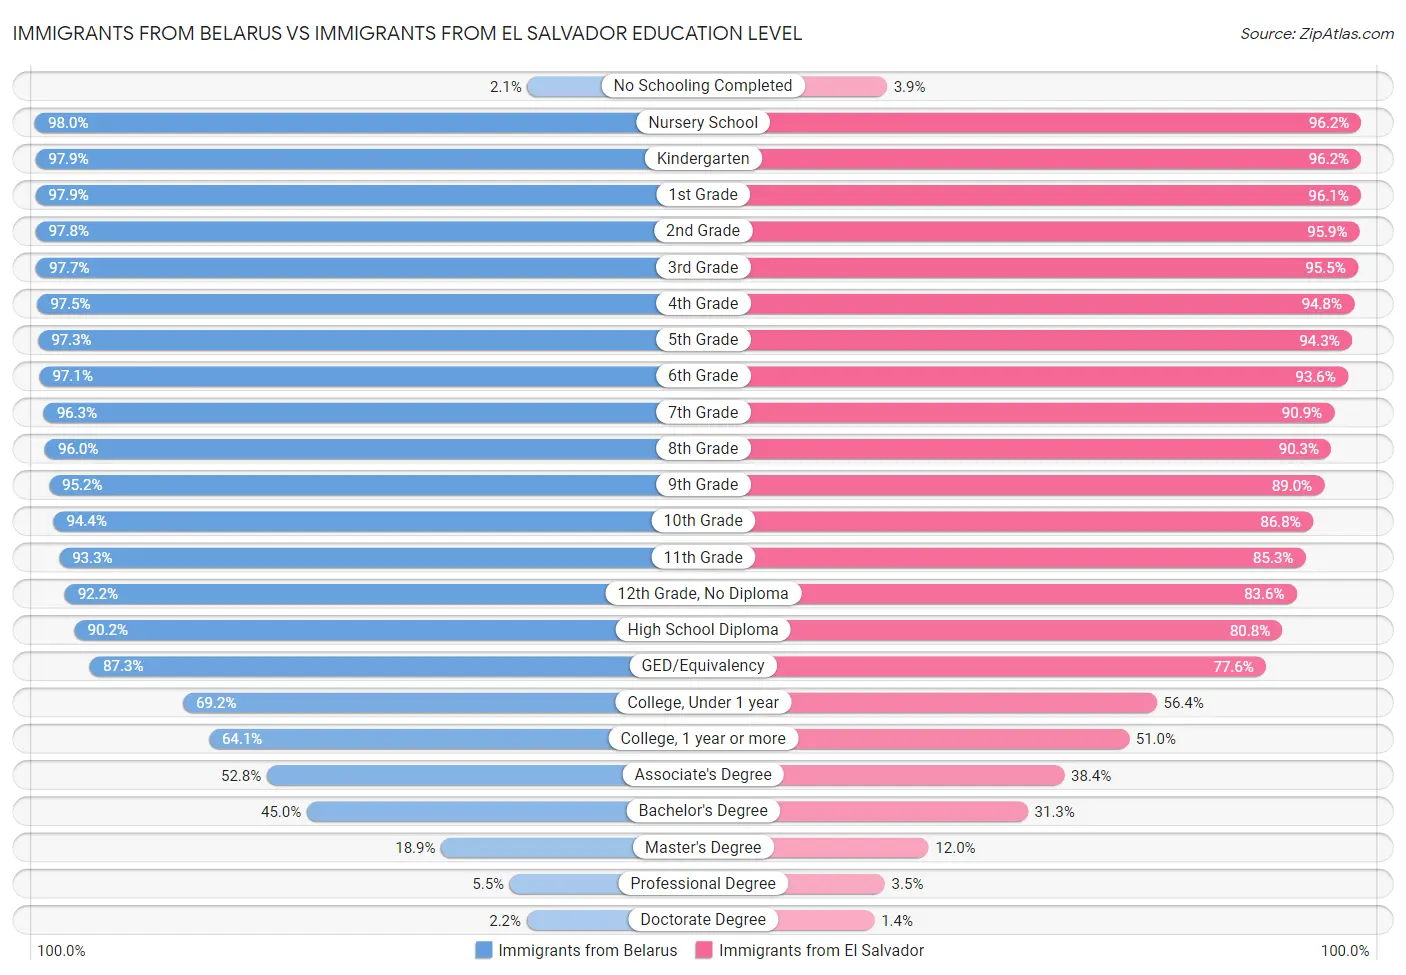 Immigrants from Belarus vs Immigrants from El Salvador Education Level